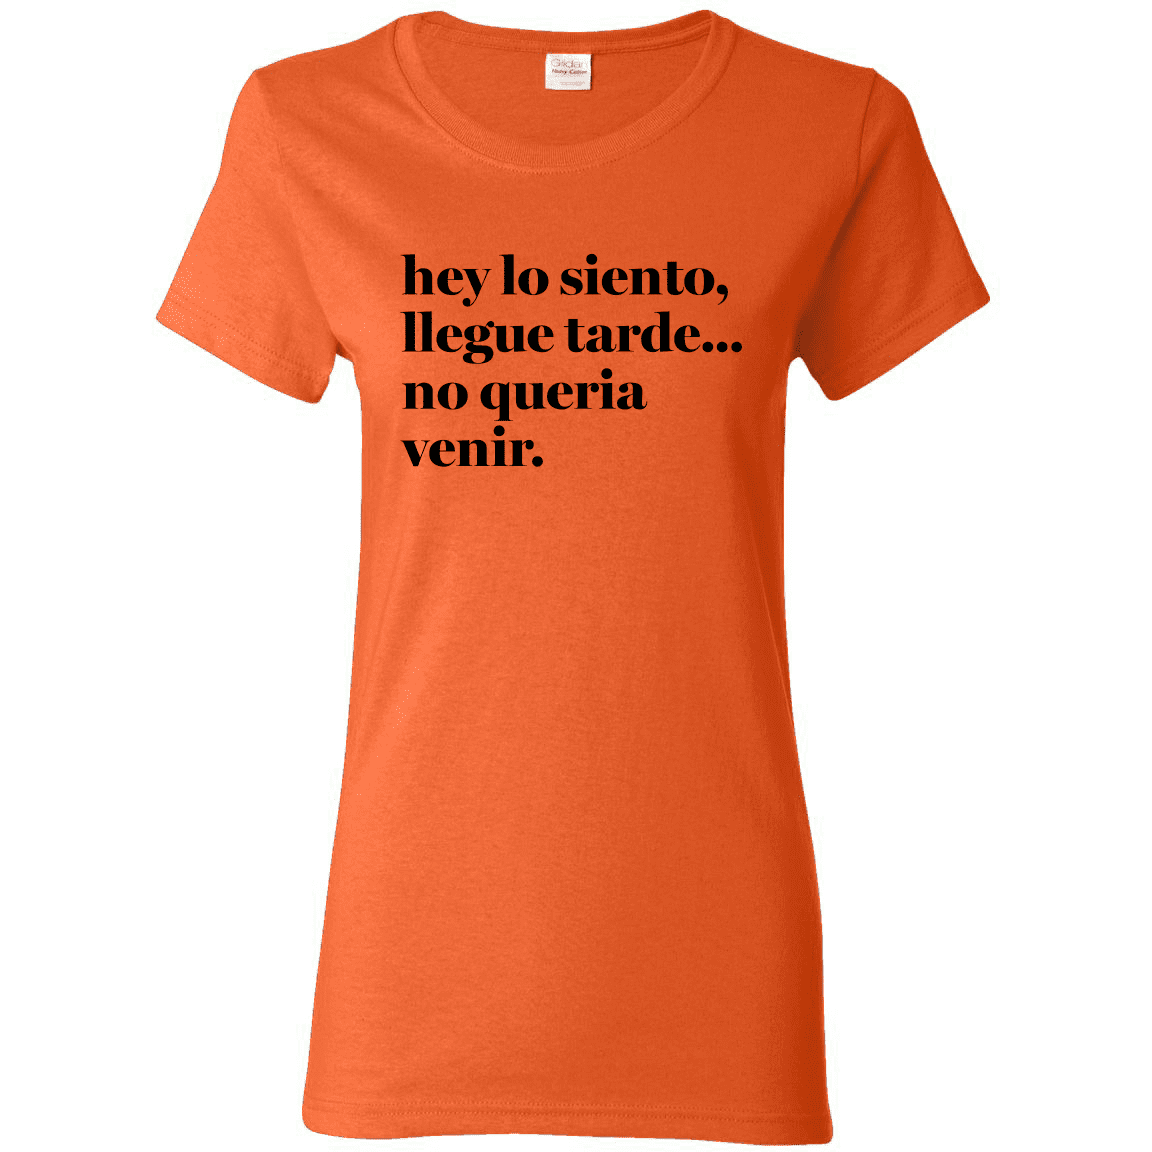 Hey Lo Siento No Queria Venir Didn't Want to Come Spanish Shirts En Espanol  Womens Graphic T-Shirt 